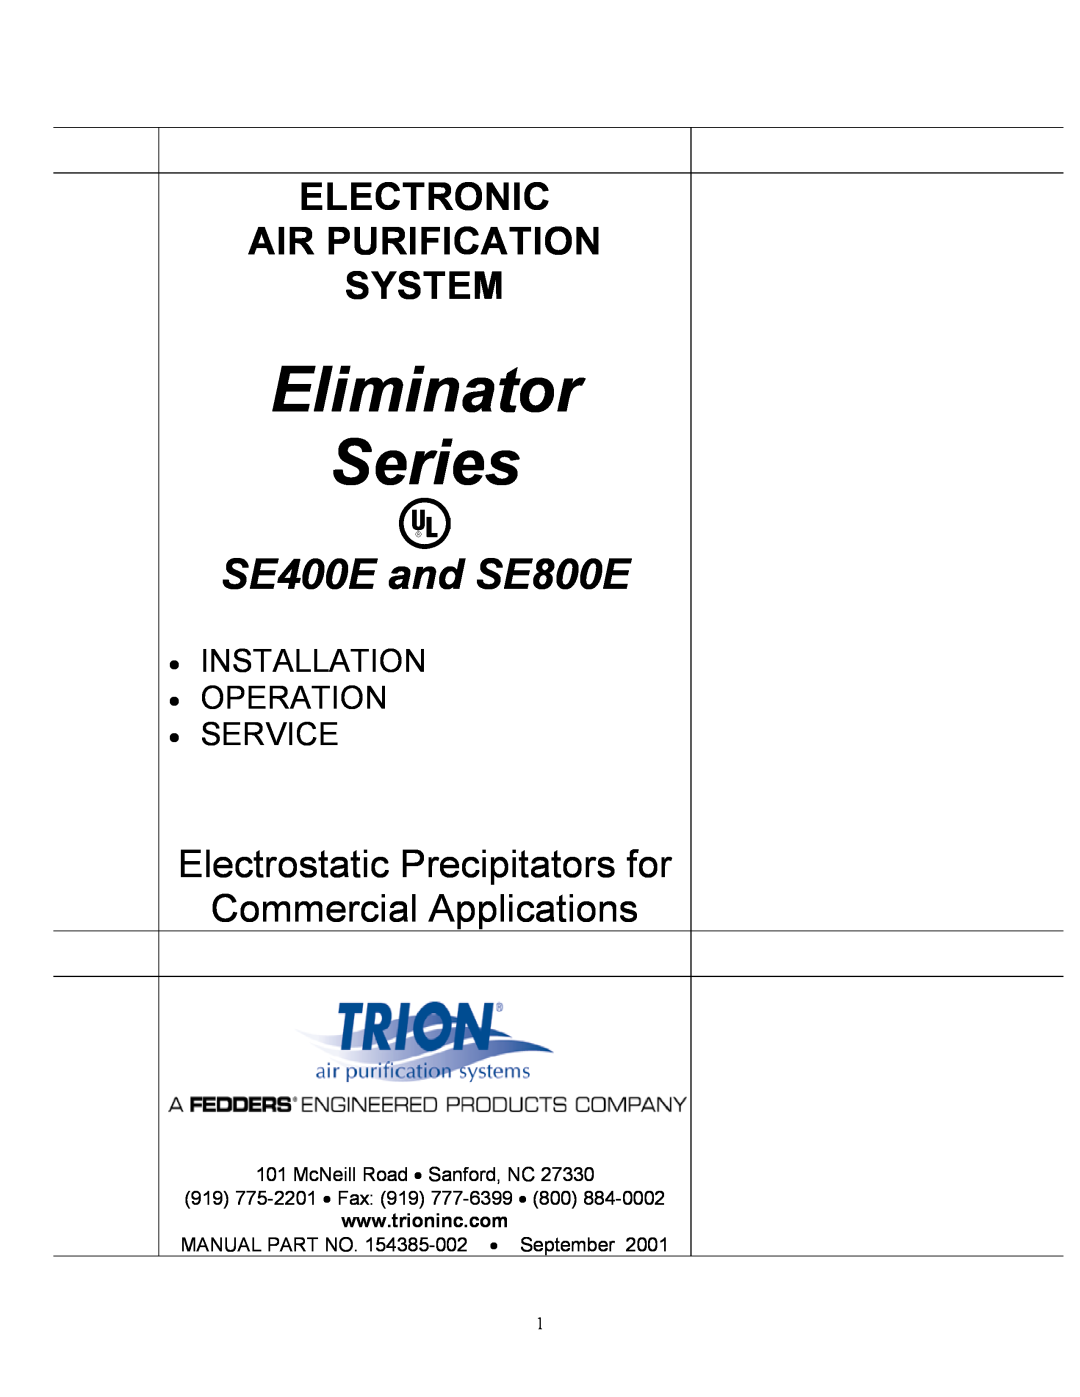 Trion manual Eliminator Series, SE400E and SE800E, Electronic Air Purification System, Electrostatic Precipitators for 